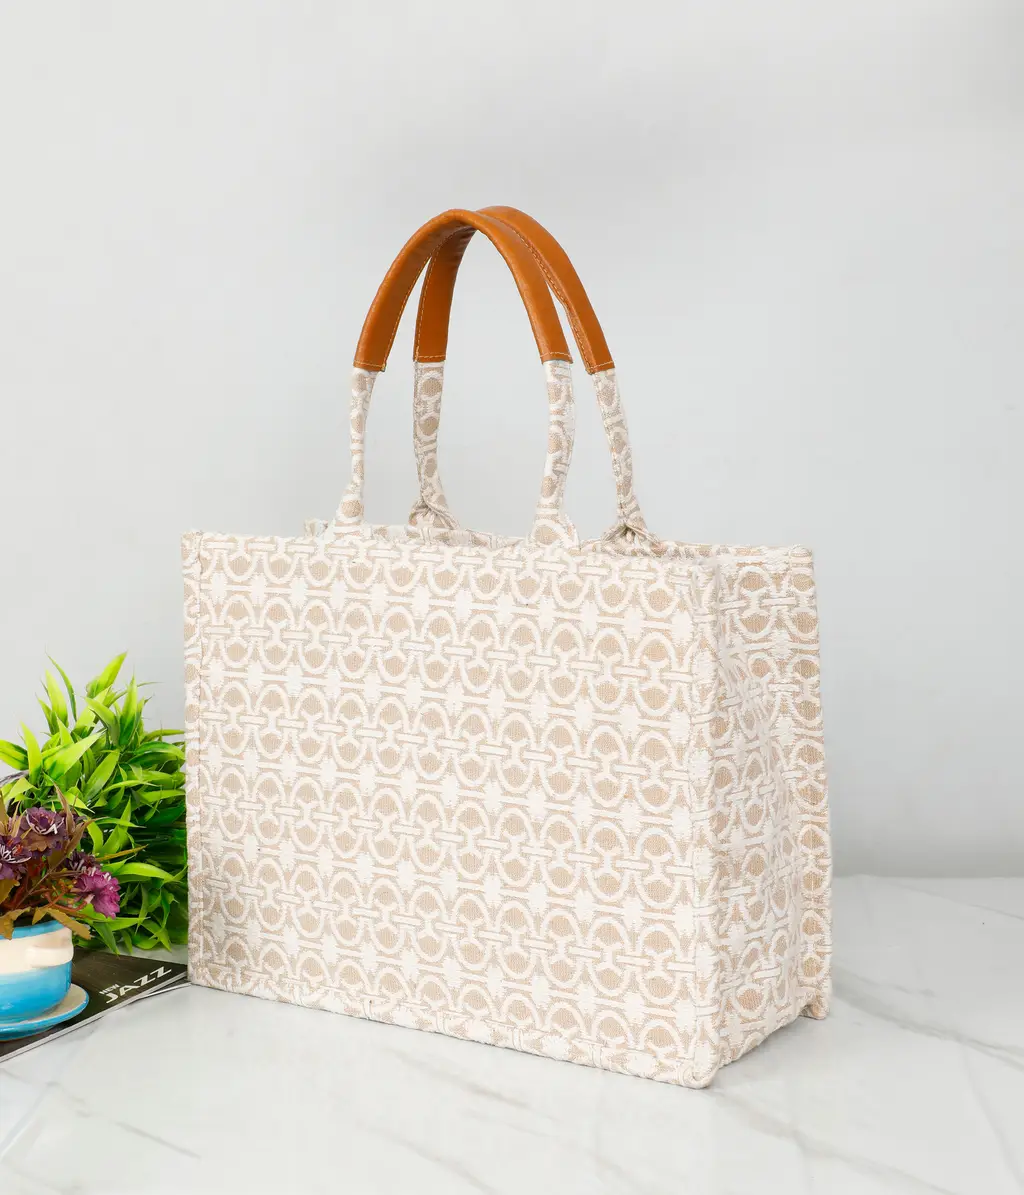 polyester cotton handbag, 14x6x11, beige, white, chain print design 1